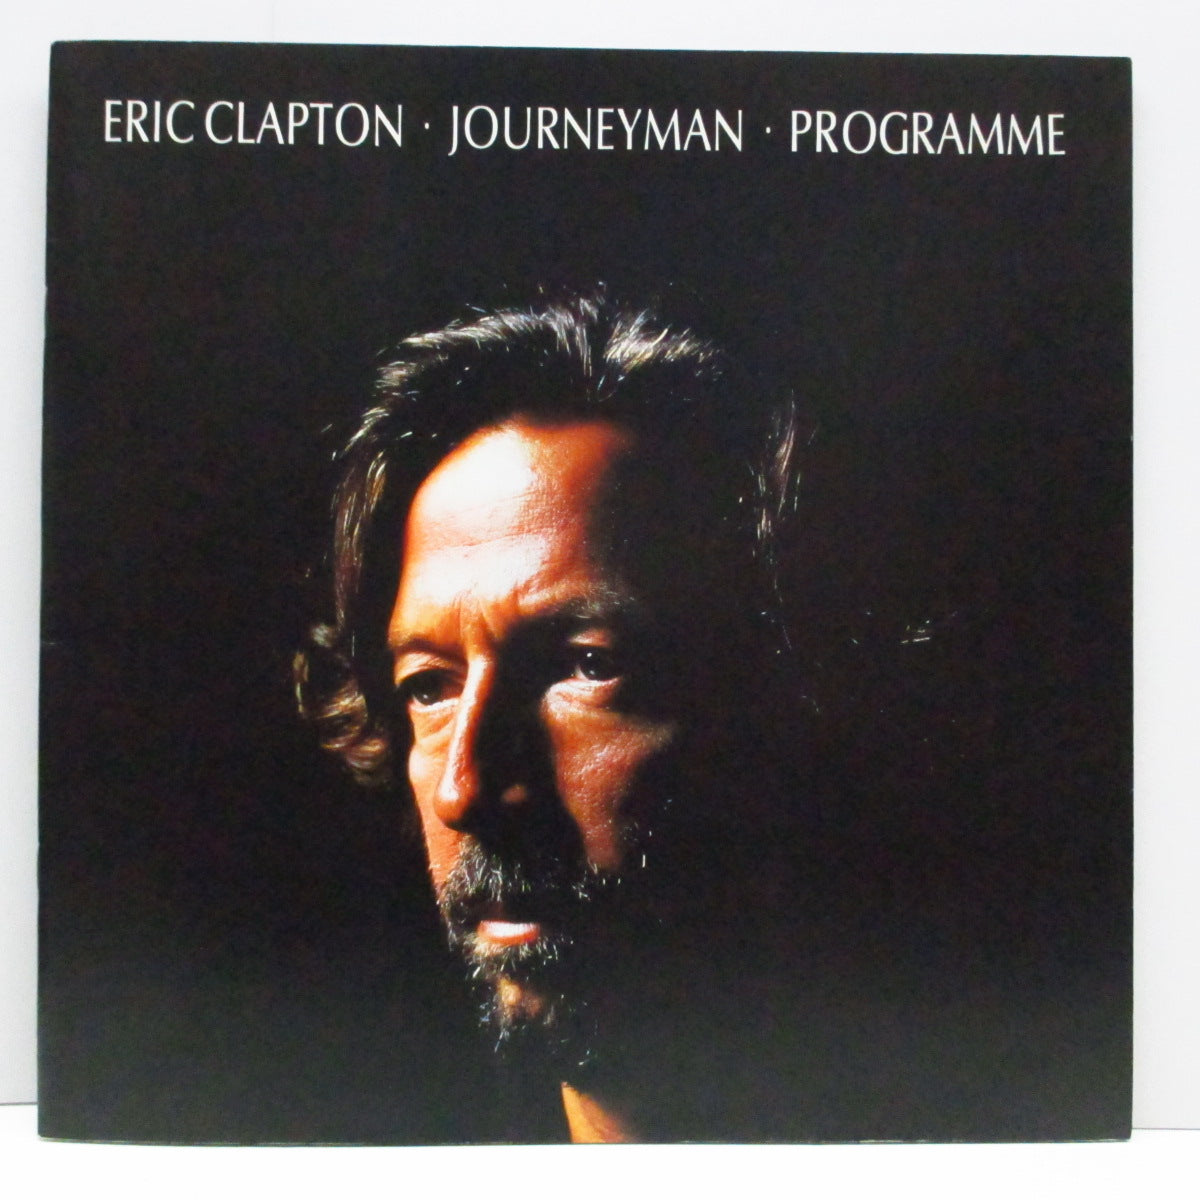 ERIC CLAPTON (エリック・クラプトン) - Journeyman Programme (UK 